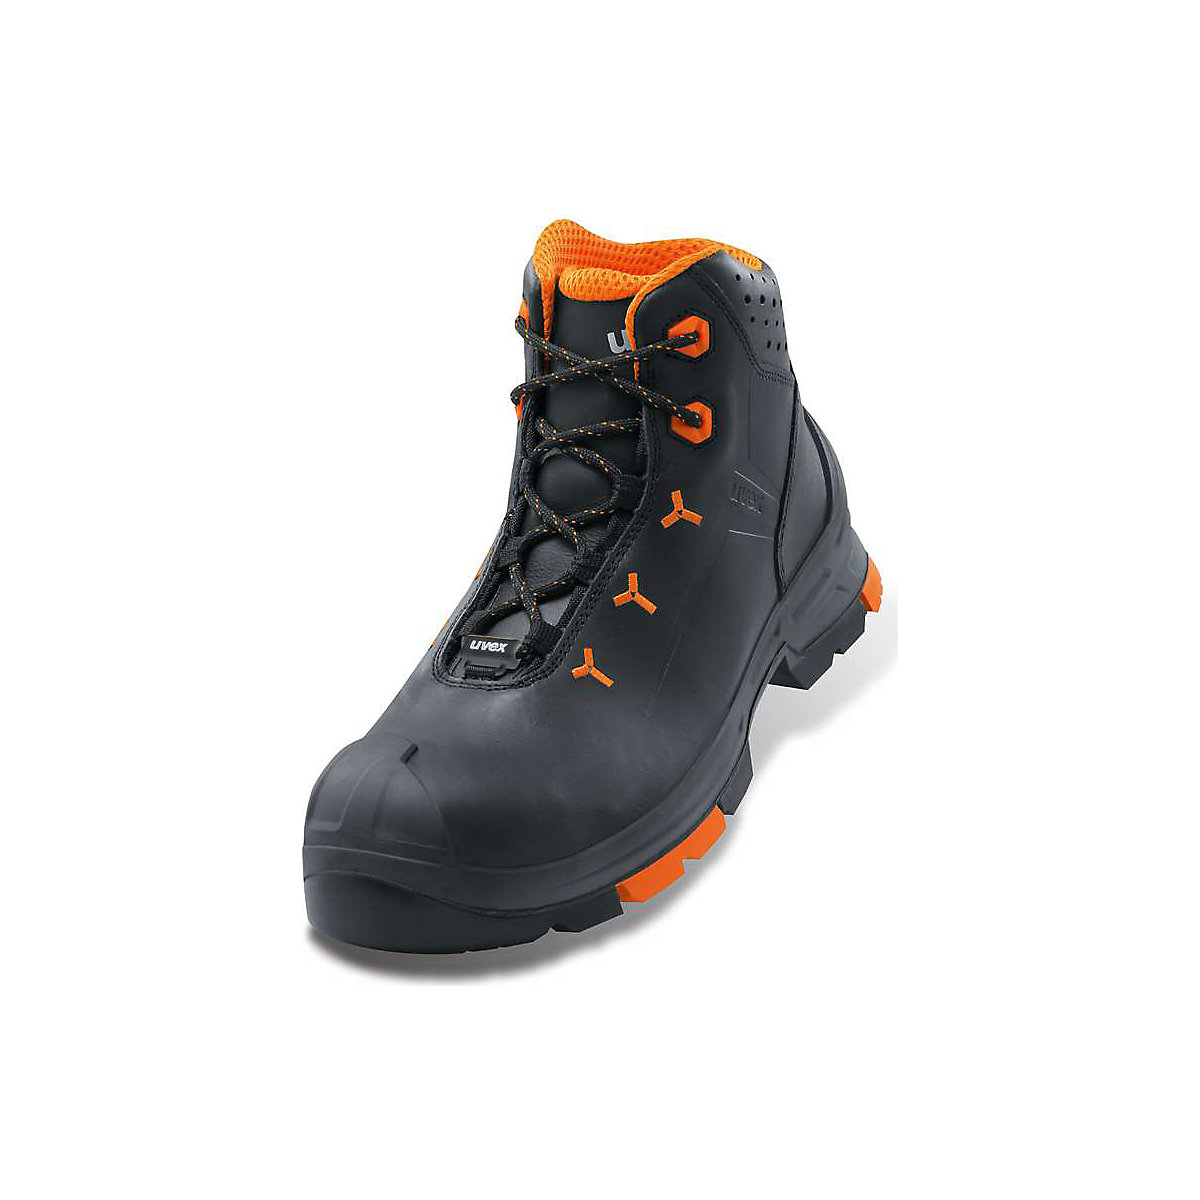 Visoki zaščitni čevlji ESD S3 SRC – Uvex